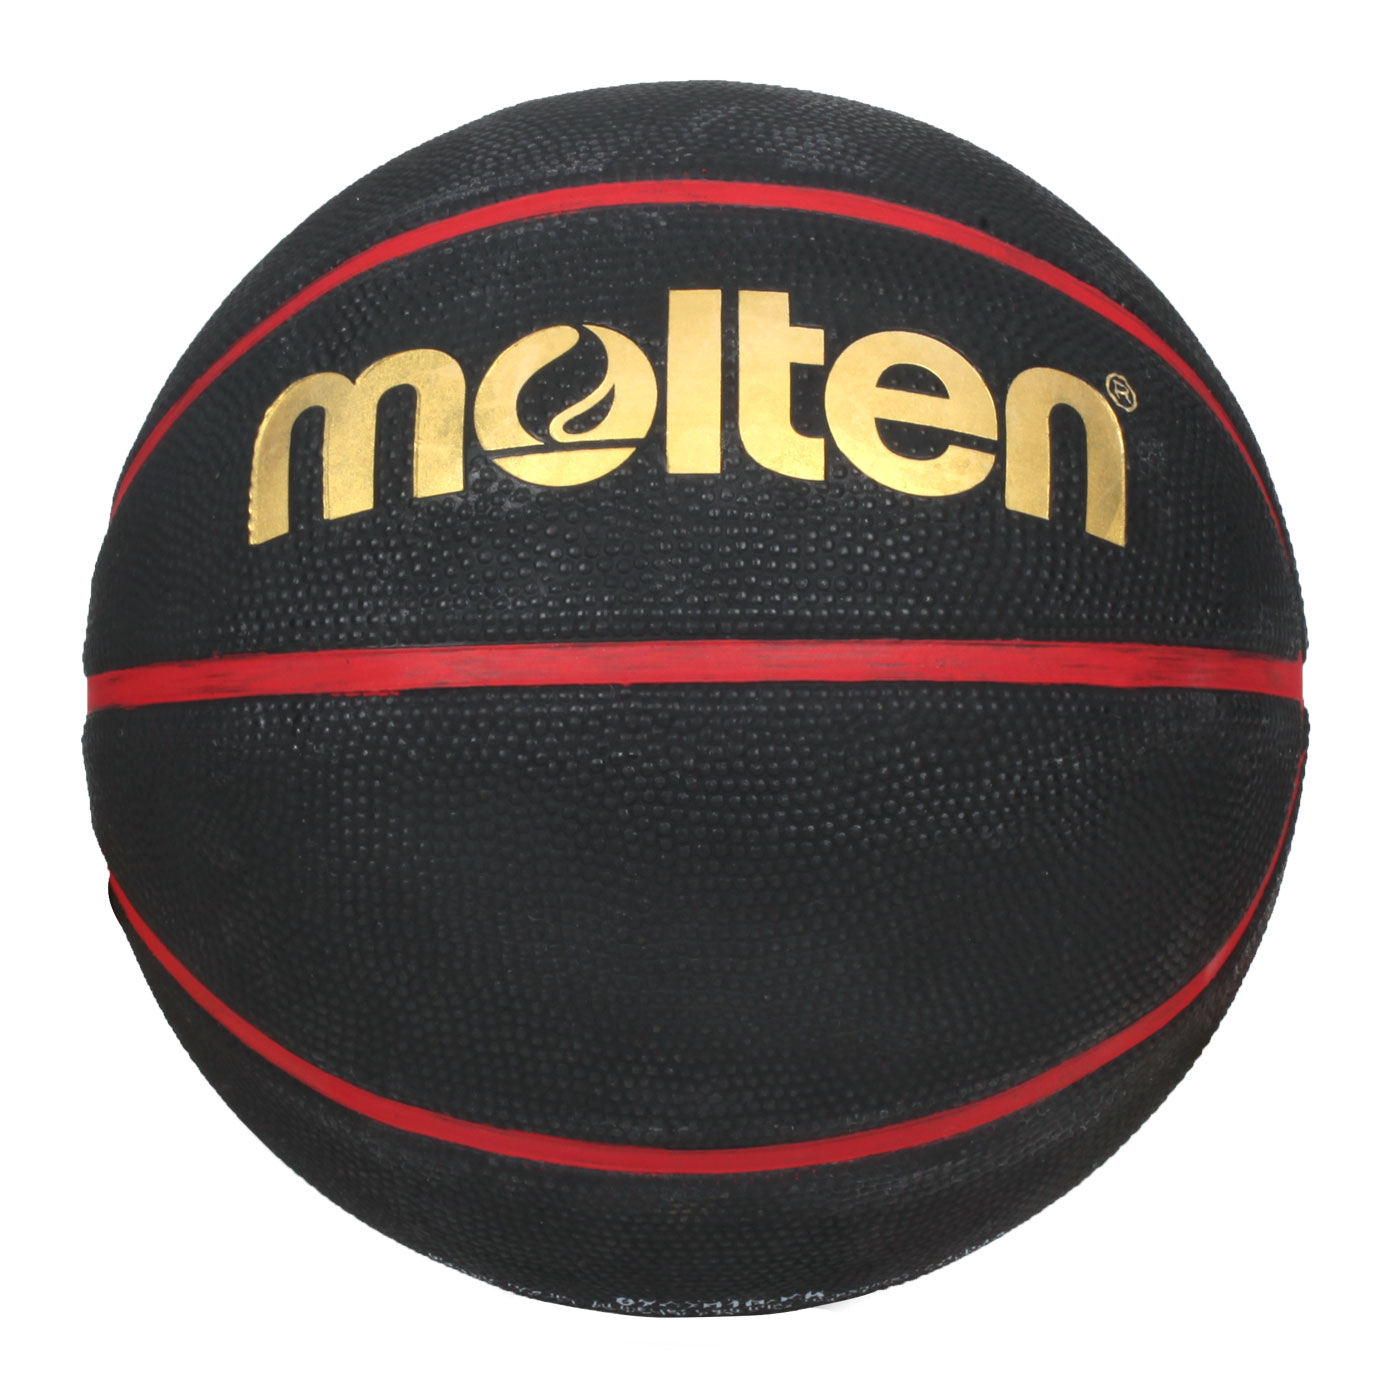 Molten 8片深溝橡膠7號籃球 B7C2010-KR - 黑紅金